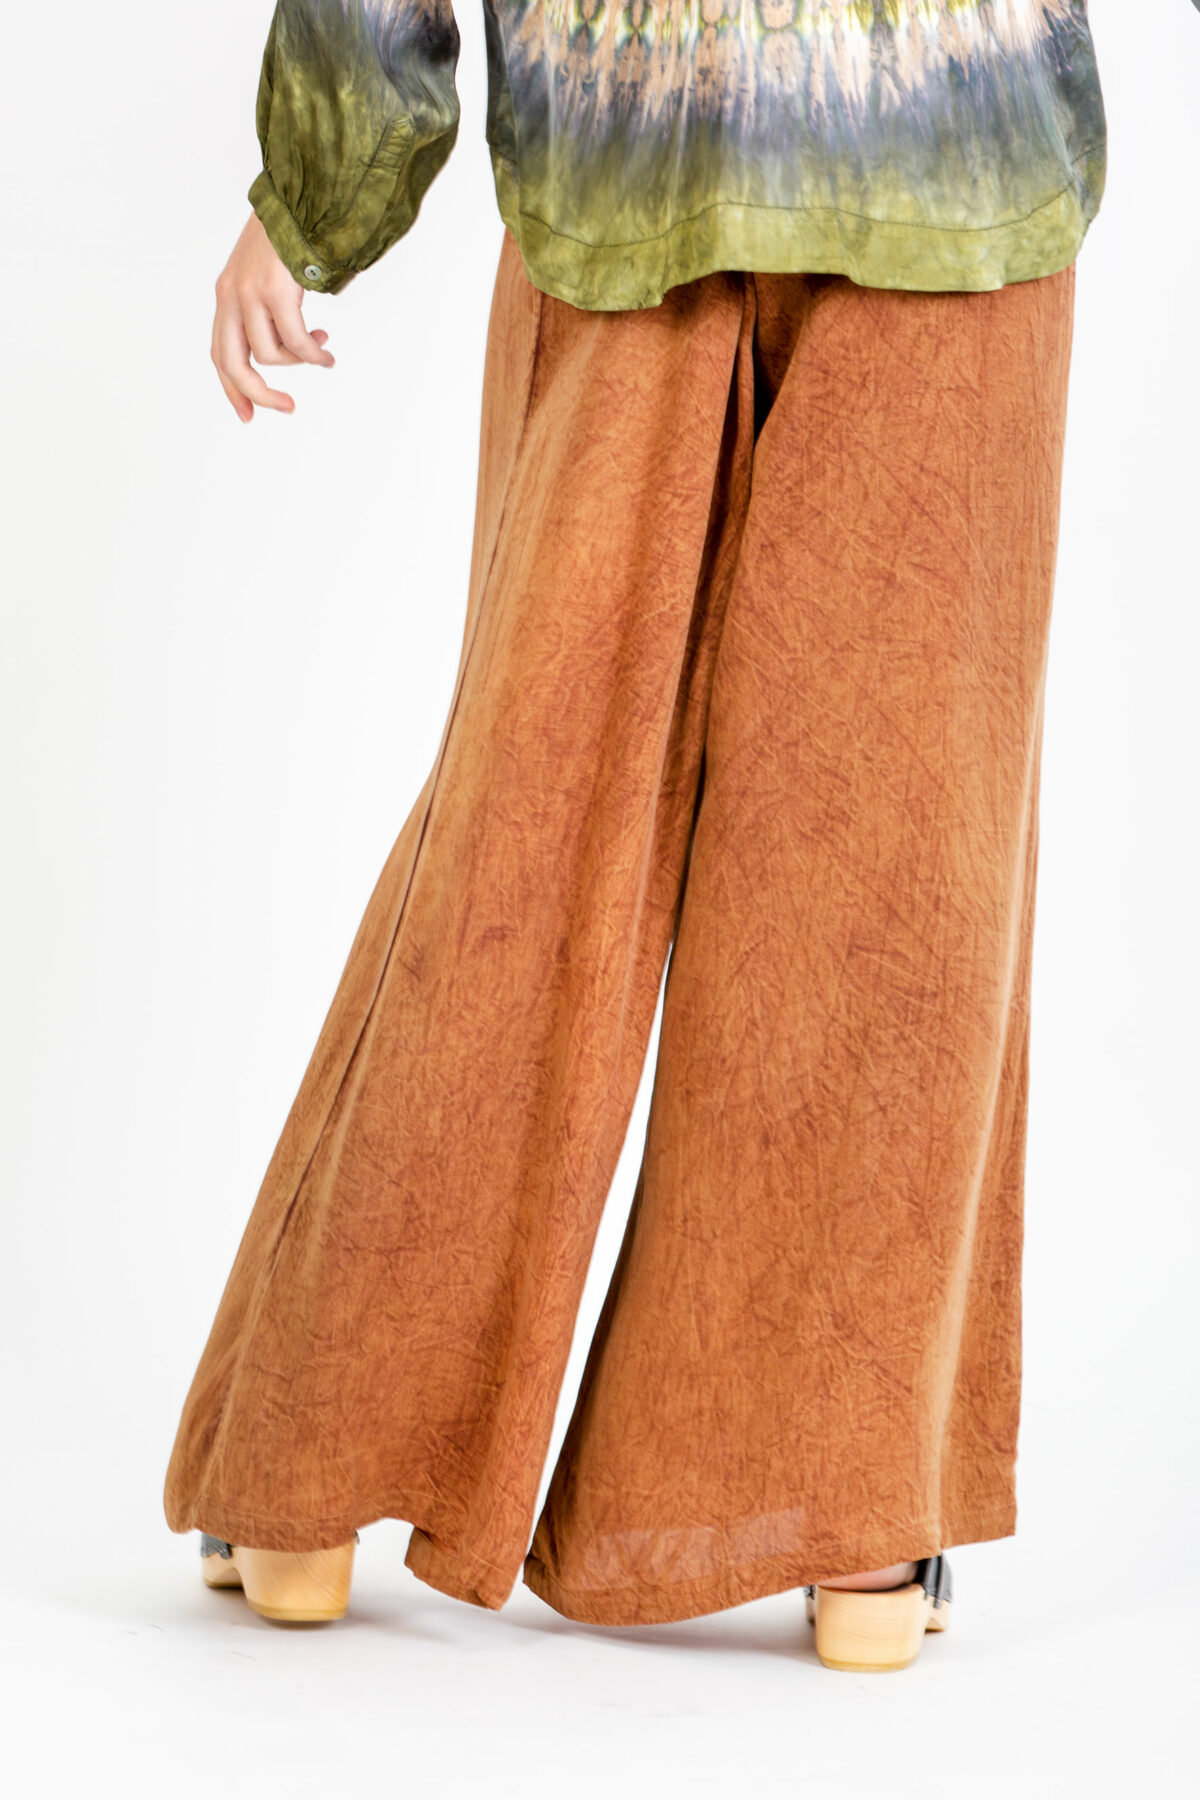 cullinan-wide-leg-trousers-brown-satin-viscose-mesdemoiselles-matchboxathens